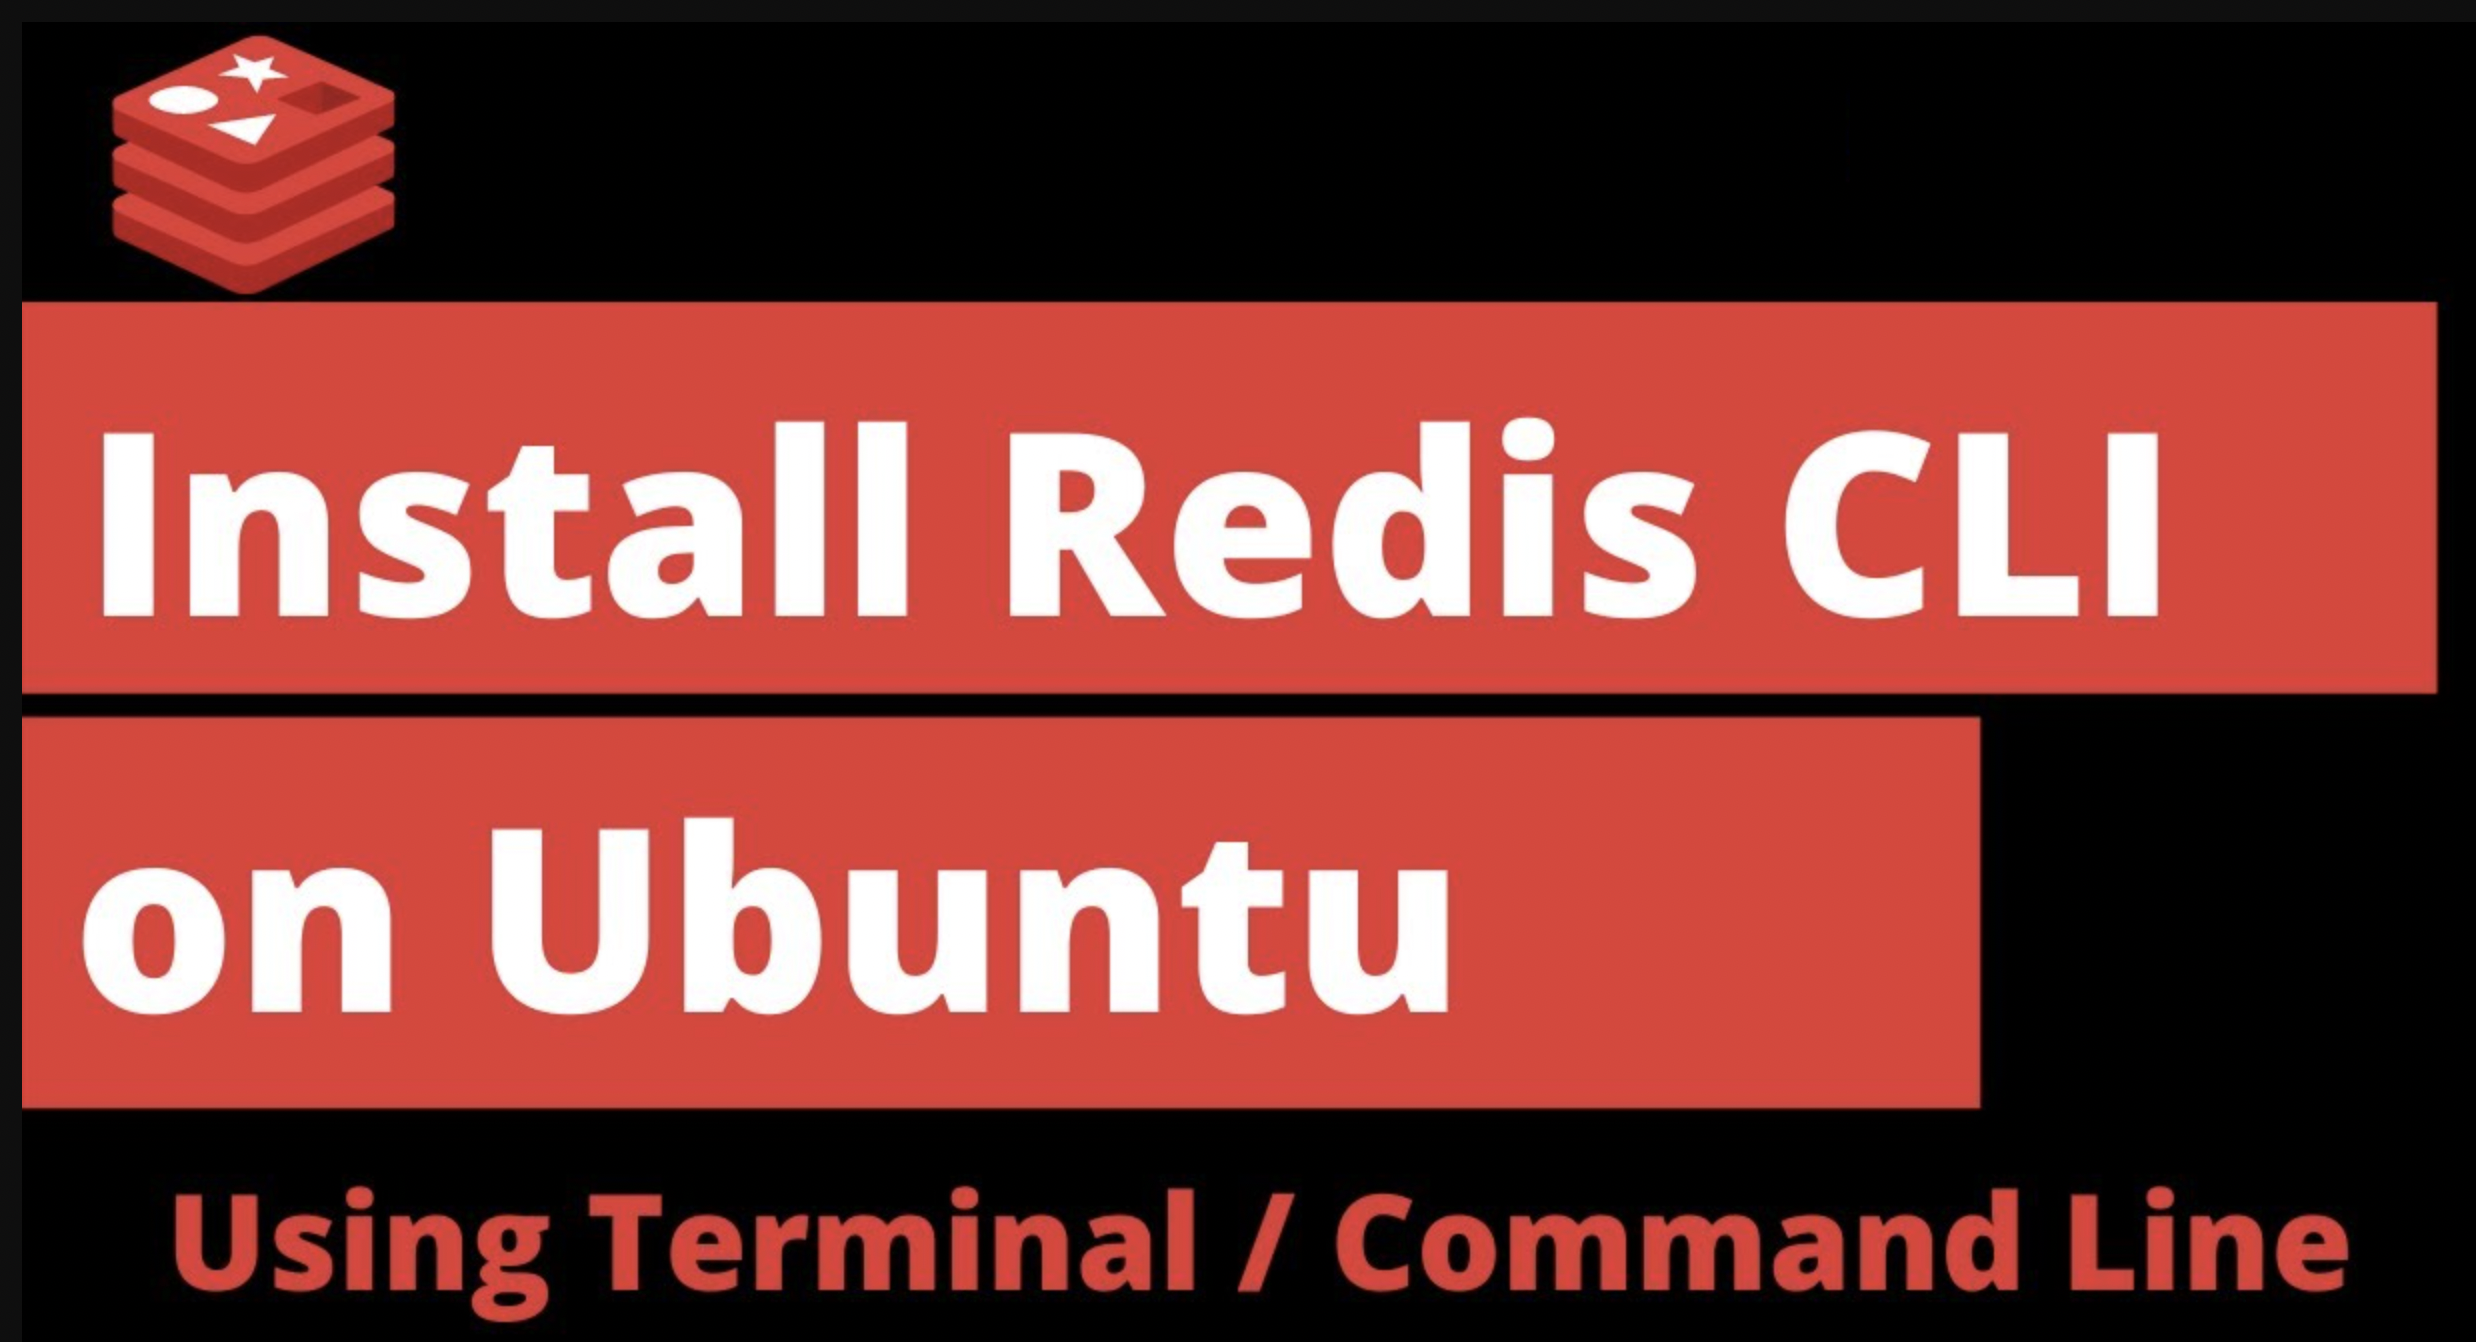 [redis-cli] a few Redis commands are useful.